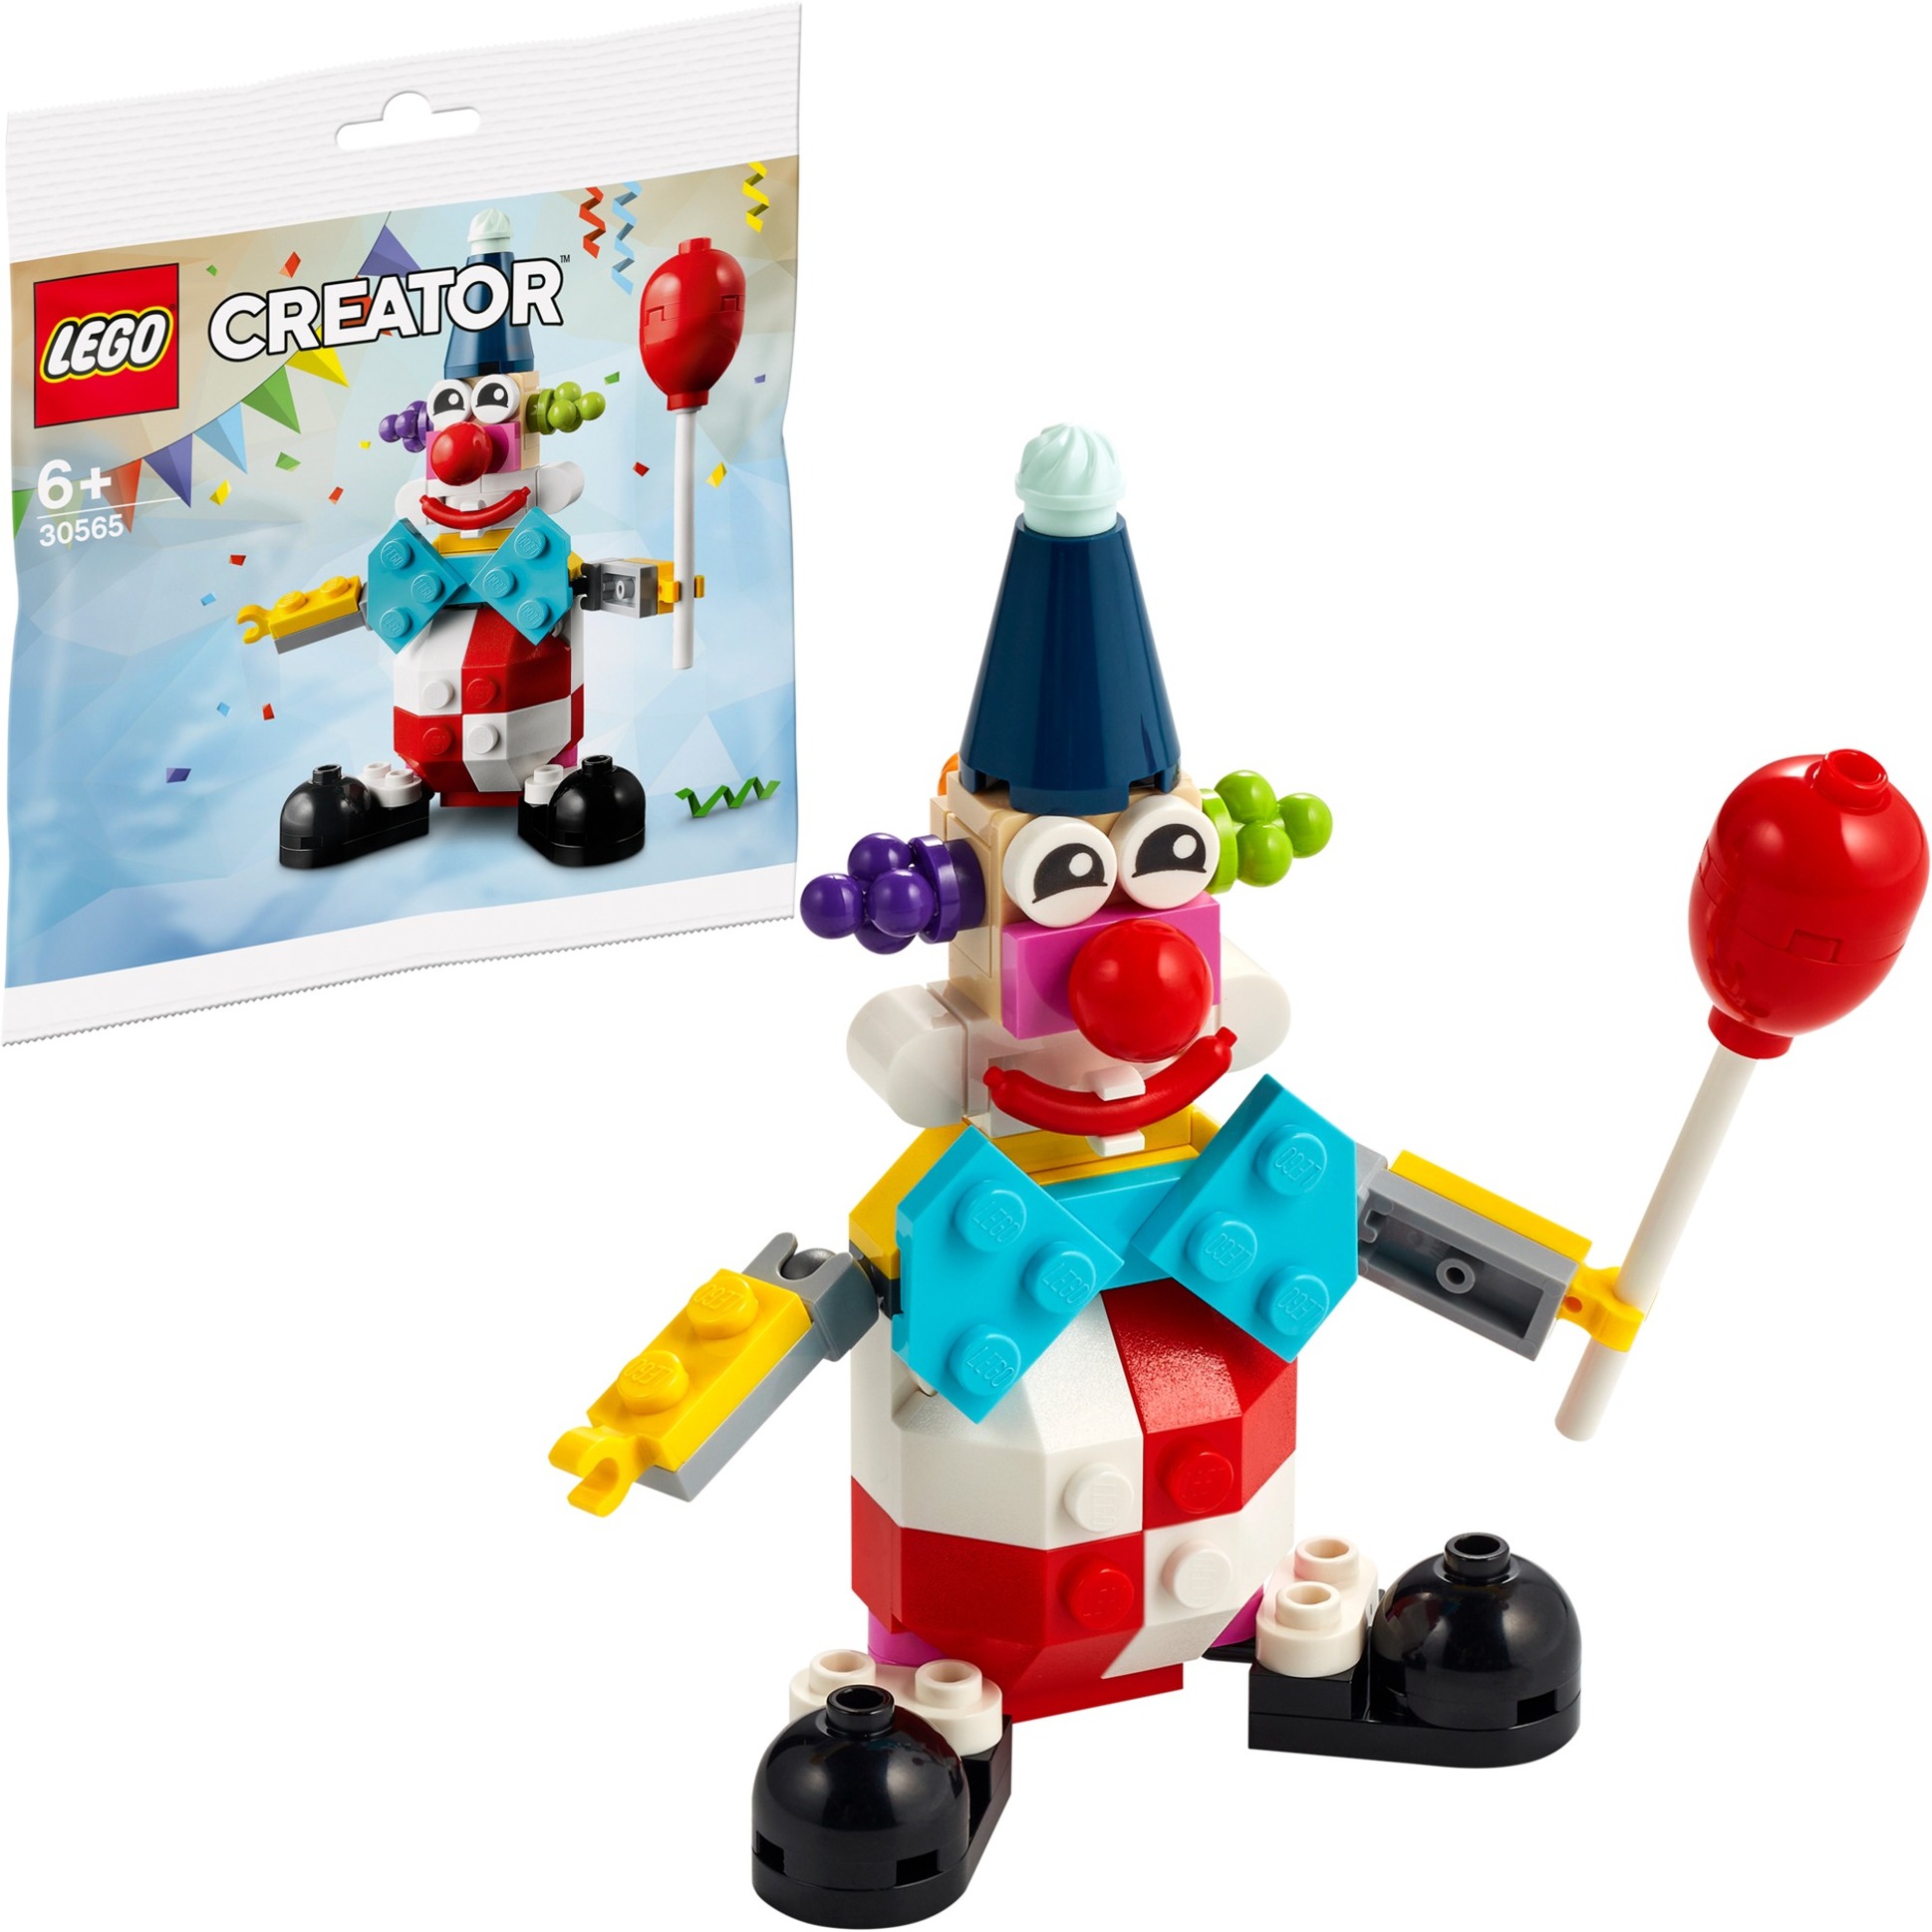 Spielzeug: Lego 30565 Creator Geburtstagsclown